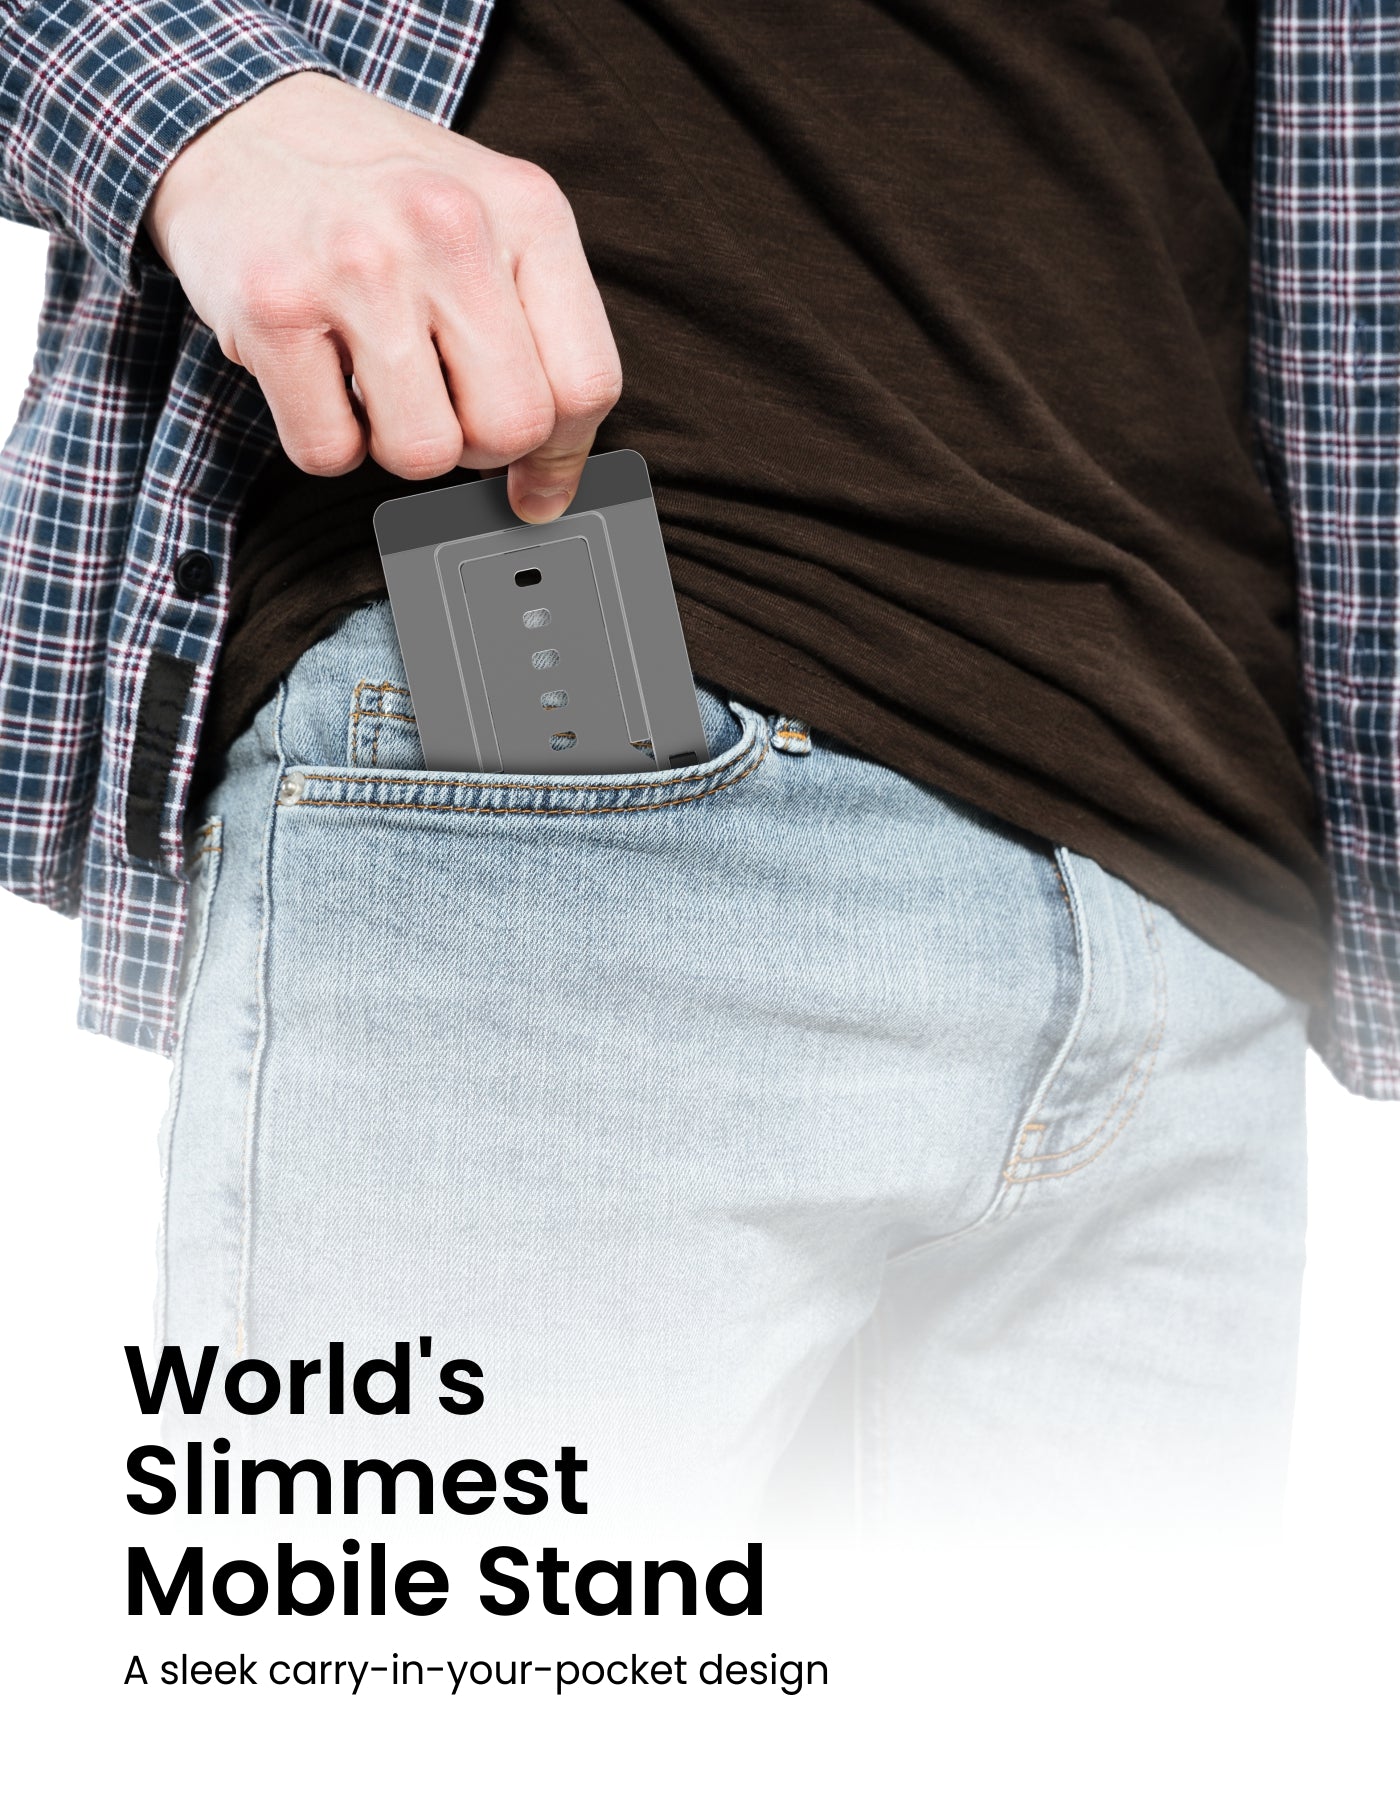 Anti slip body of Portronics Modesk one Phone | Mobile Stand/Holder pocket friendly